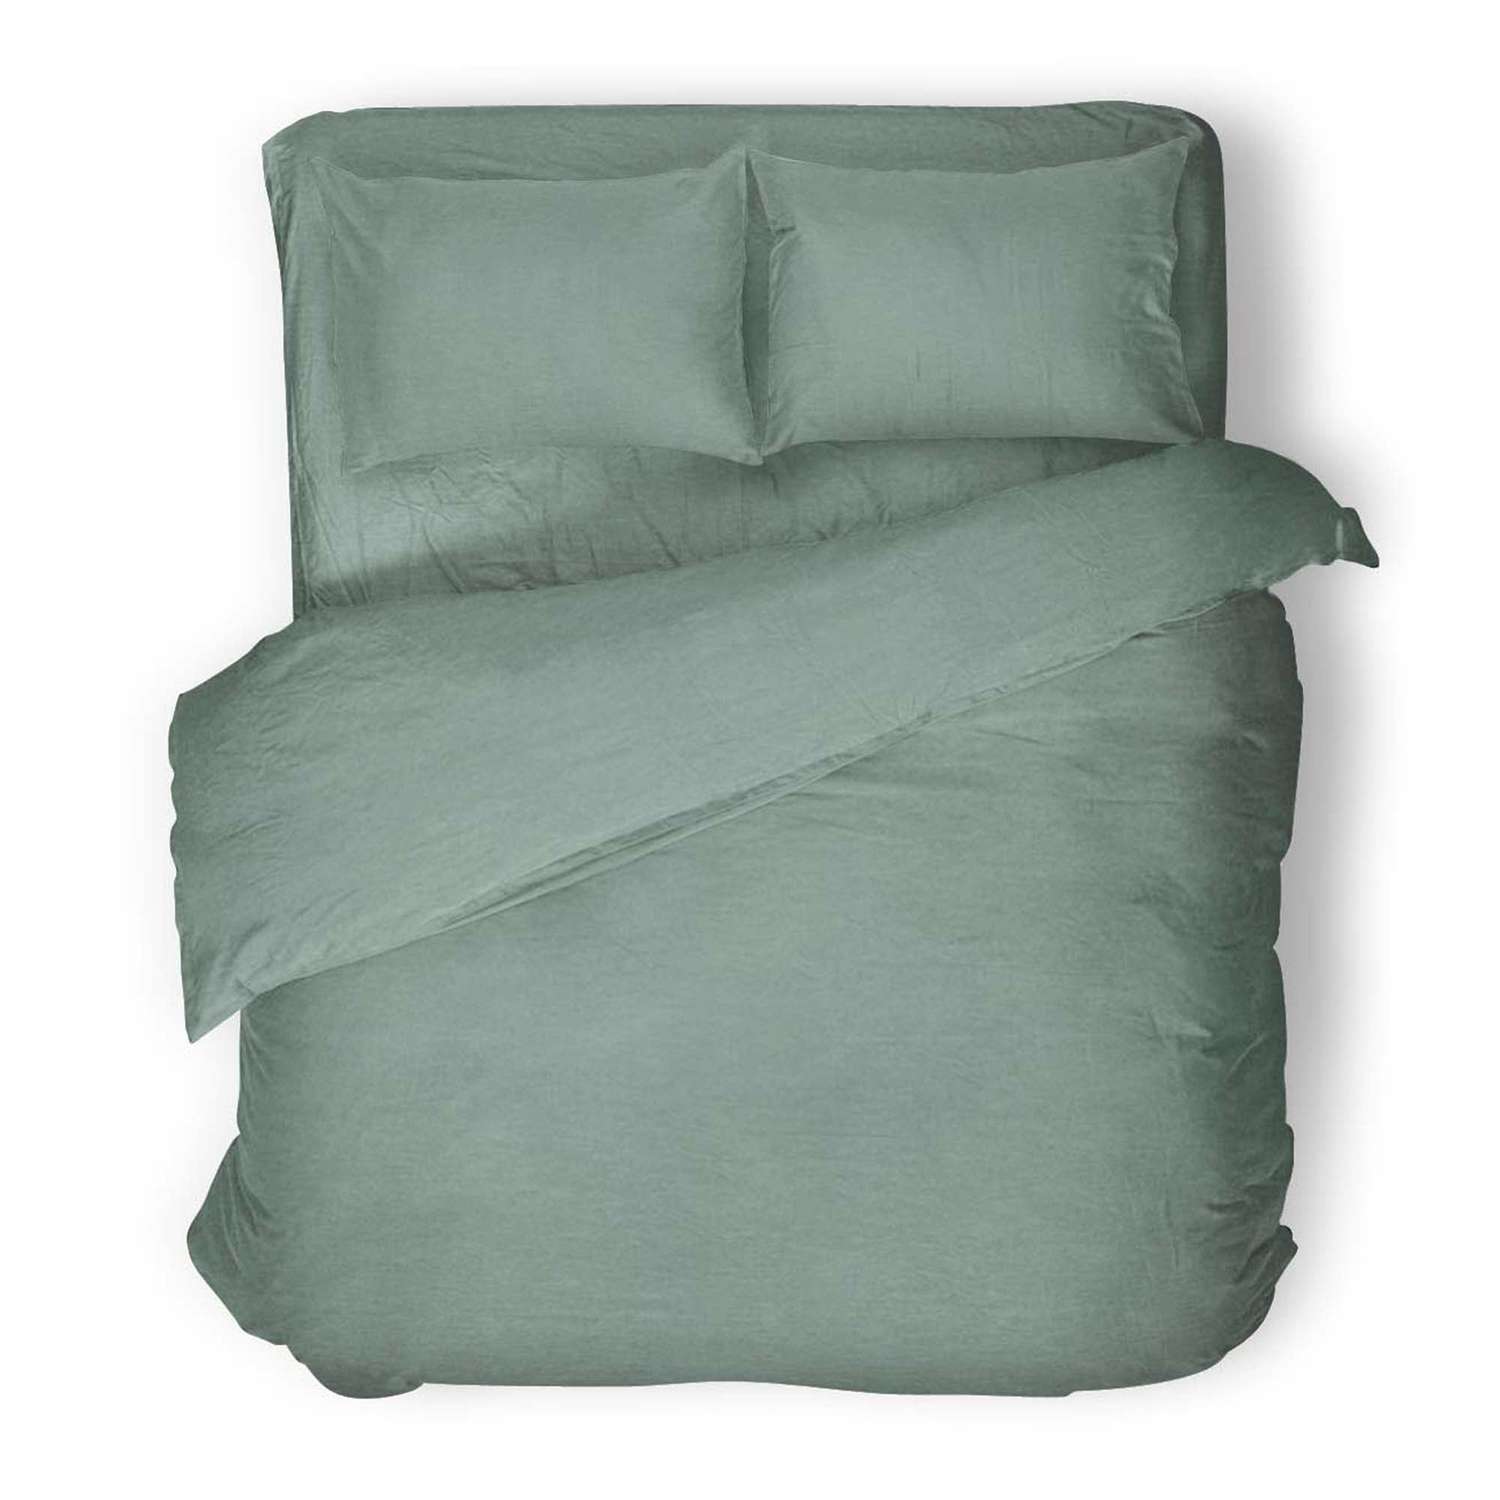 Комплект постельного белья Absolut 1.5СП Emerald наволочки 50х70см меланж - фото 1